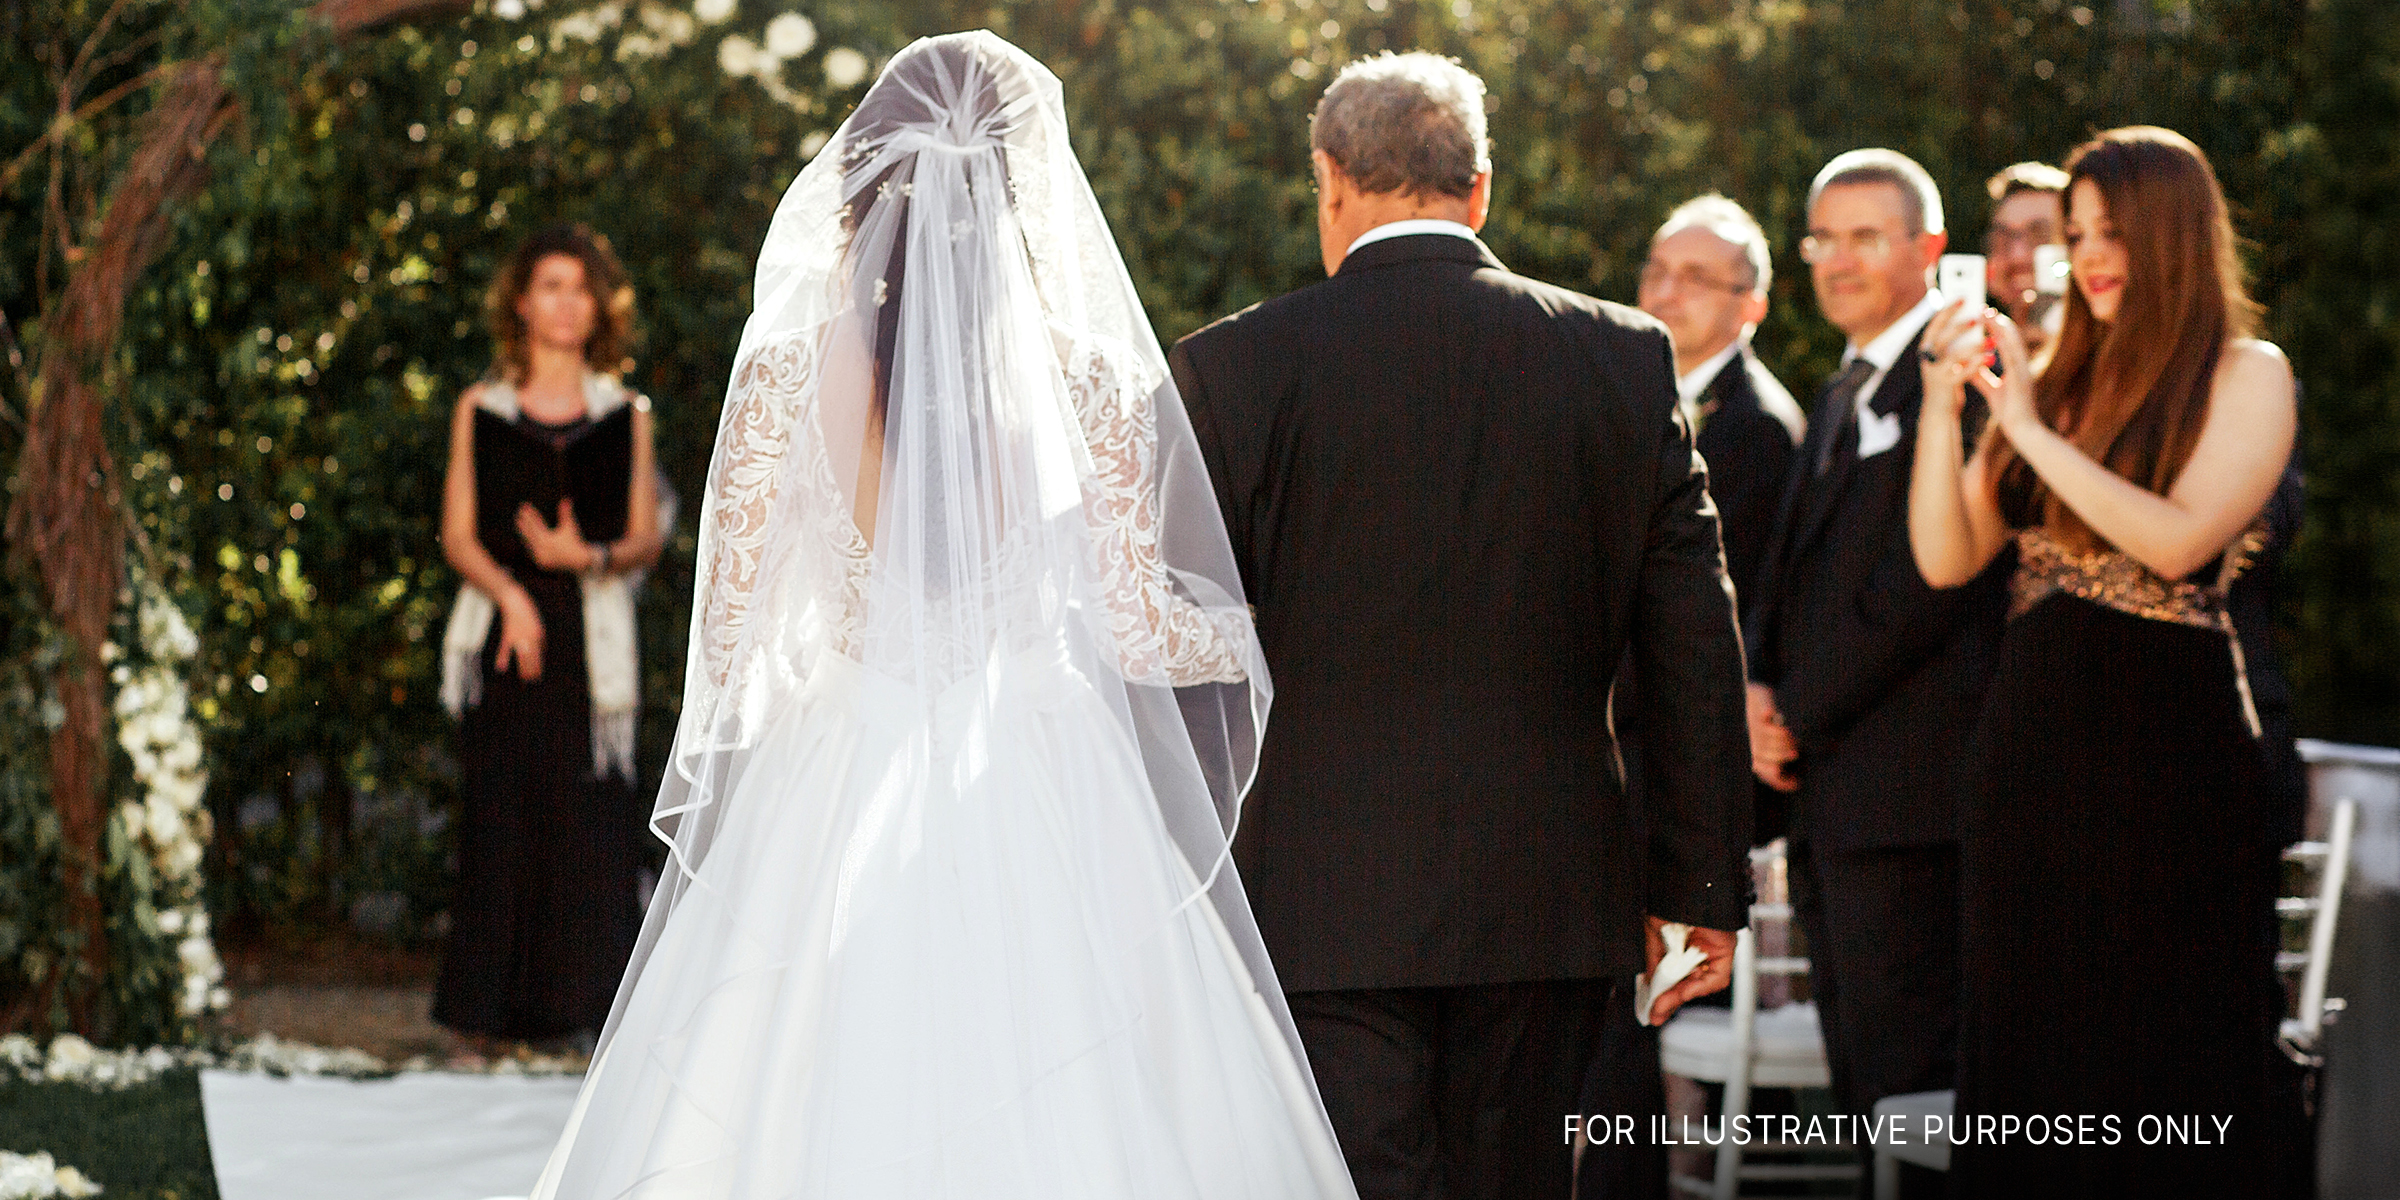 A bride walking down the aisle | Source: Shutterstock